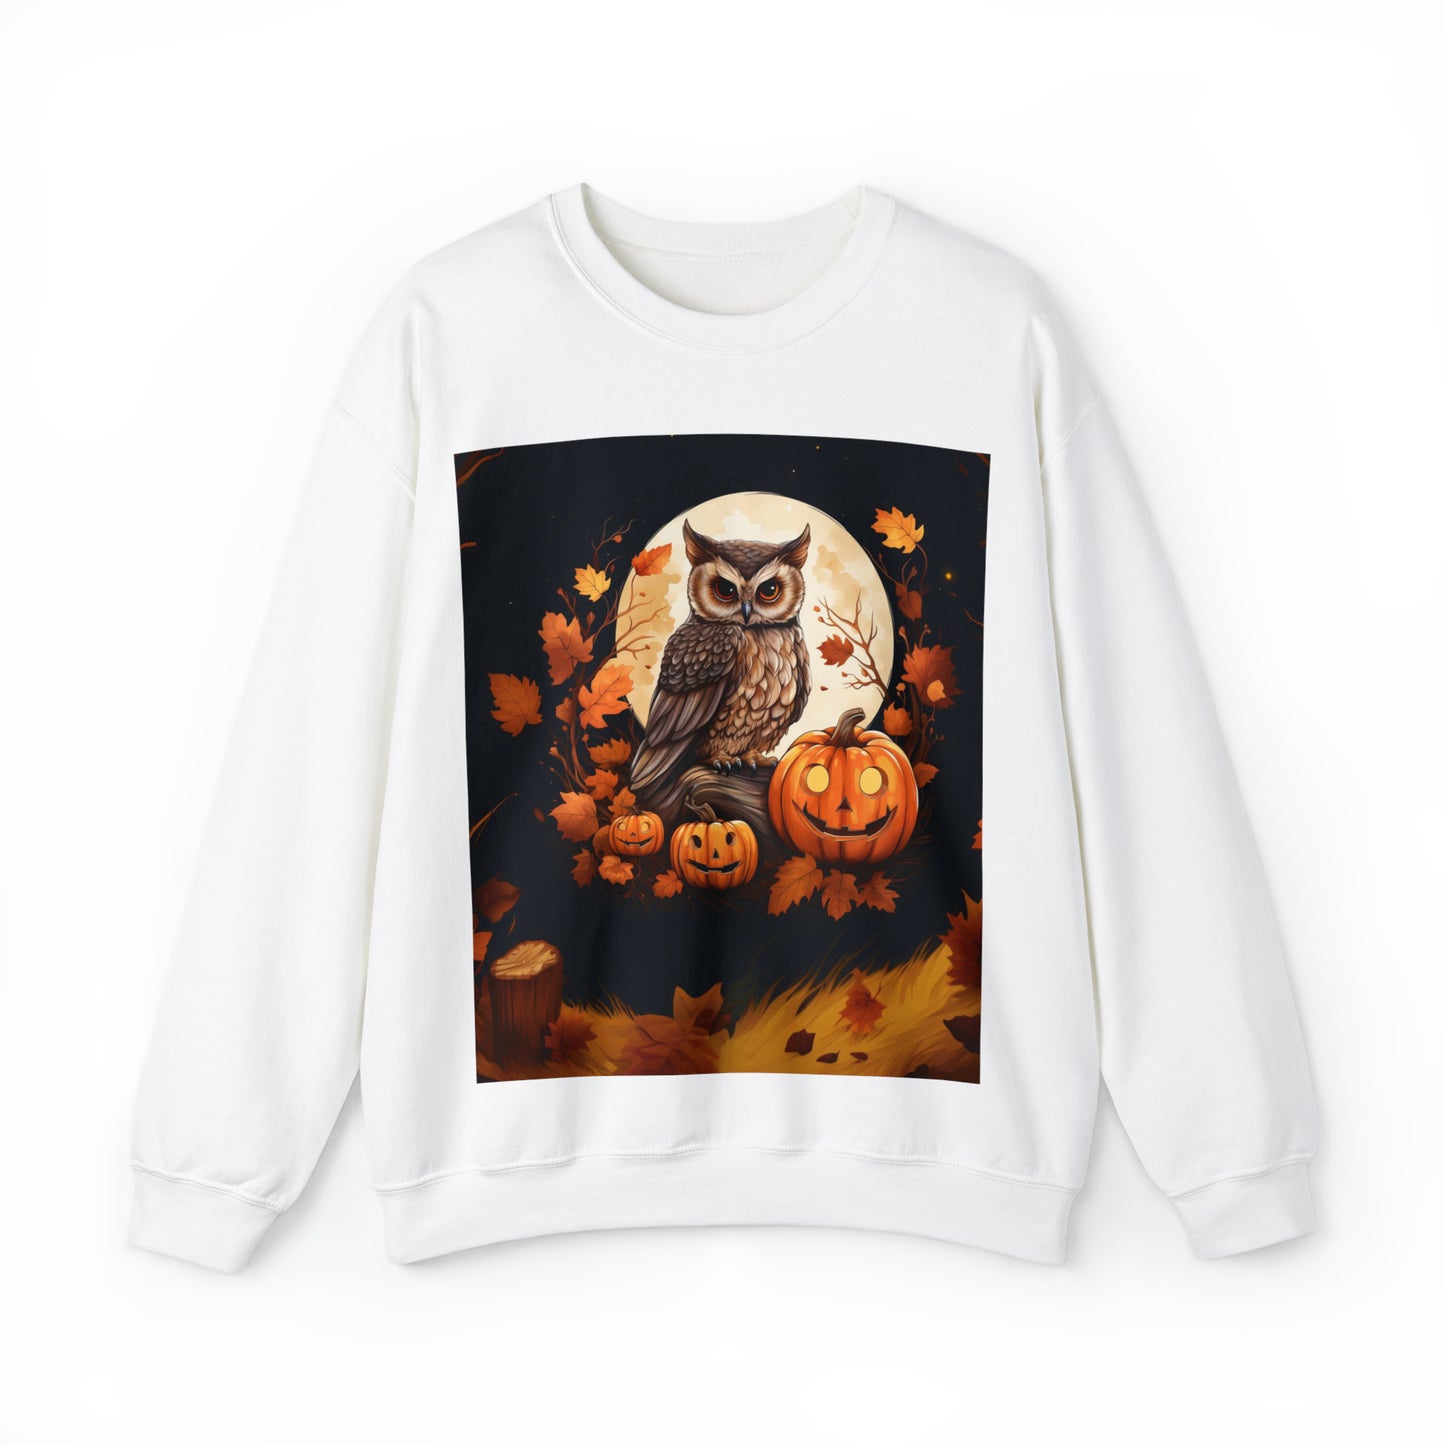 Owl and Pumpkin Halloween Sweatshirt Men's Women's Black Grey White Small Medium Large XL XXL XXL Halloween Sweatshirts